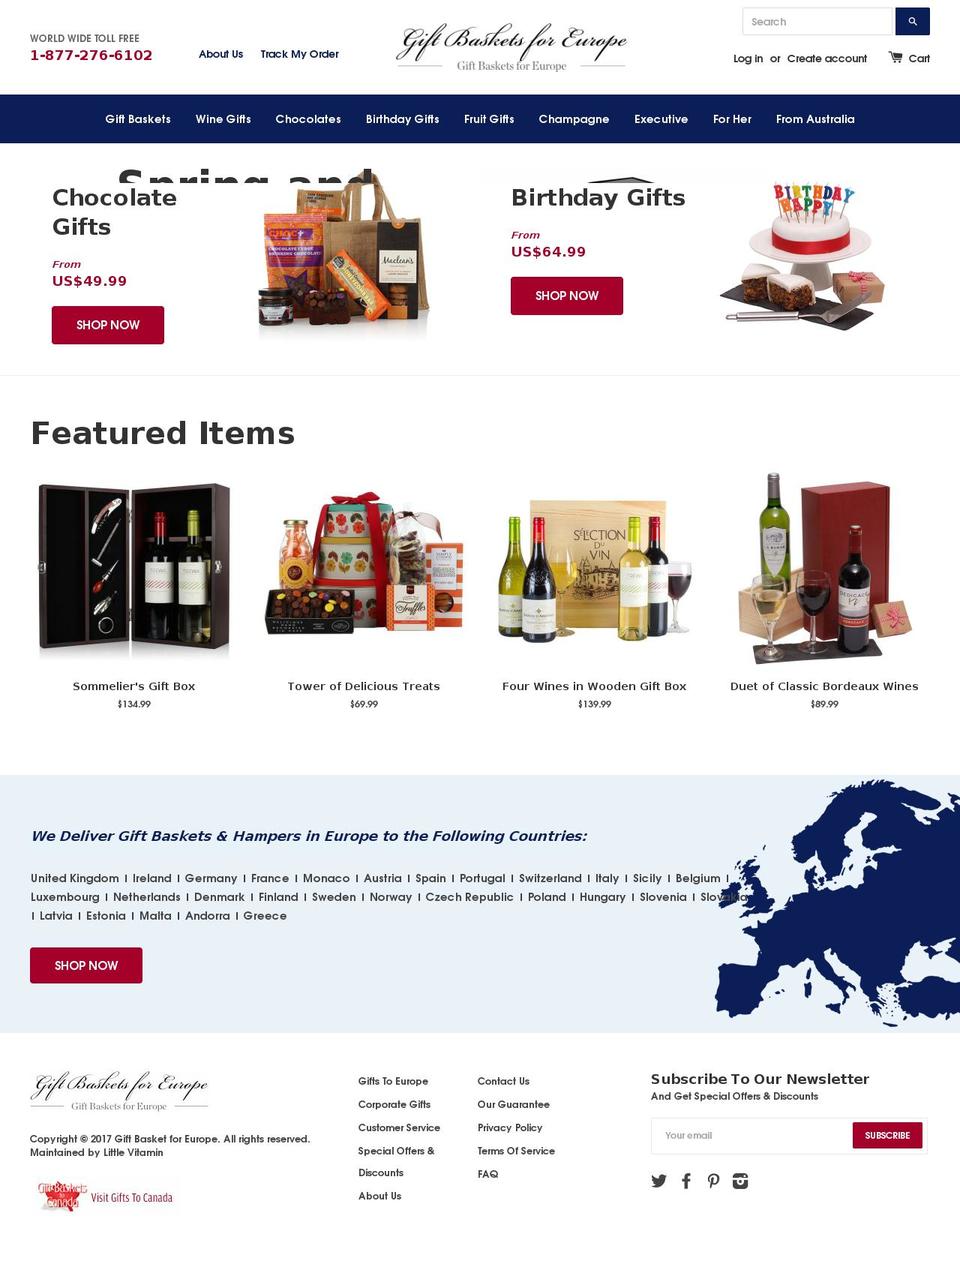 giftbasketsforeurope.com shopify website screenshot